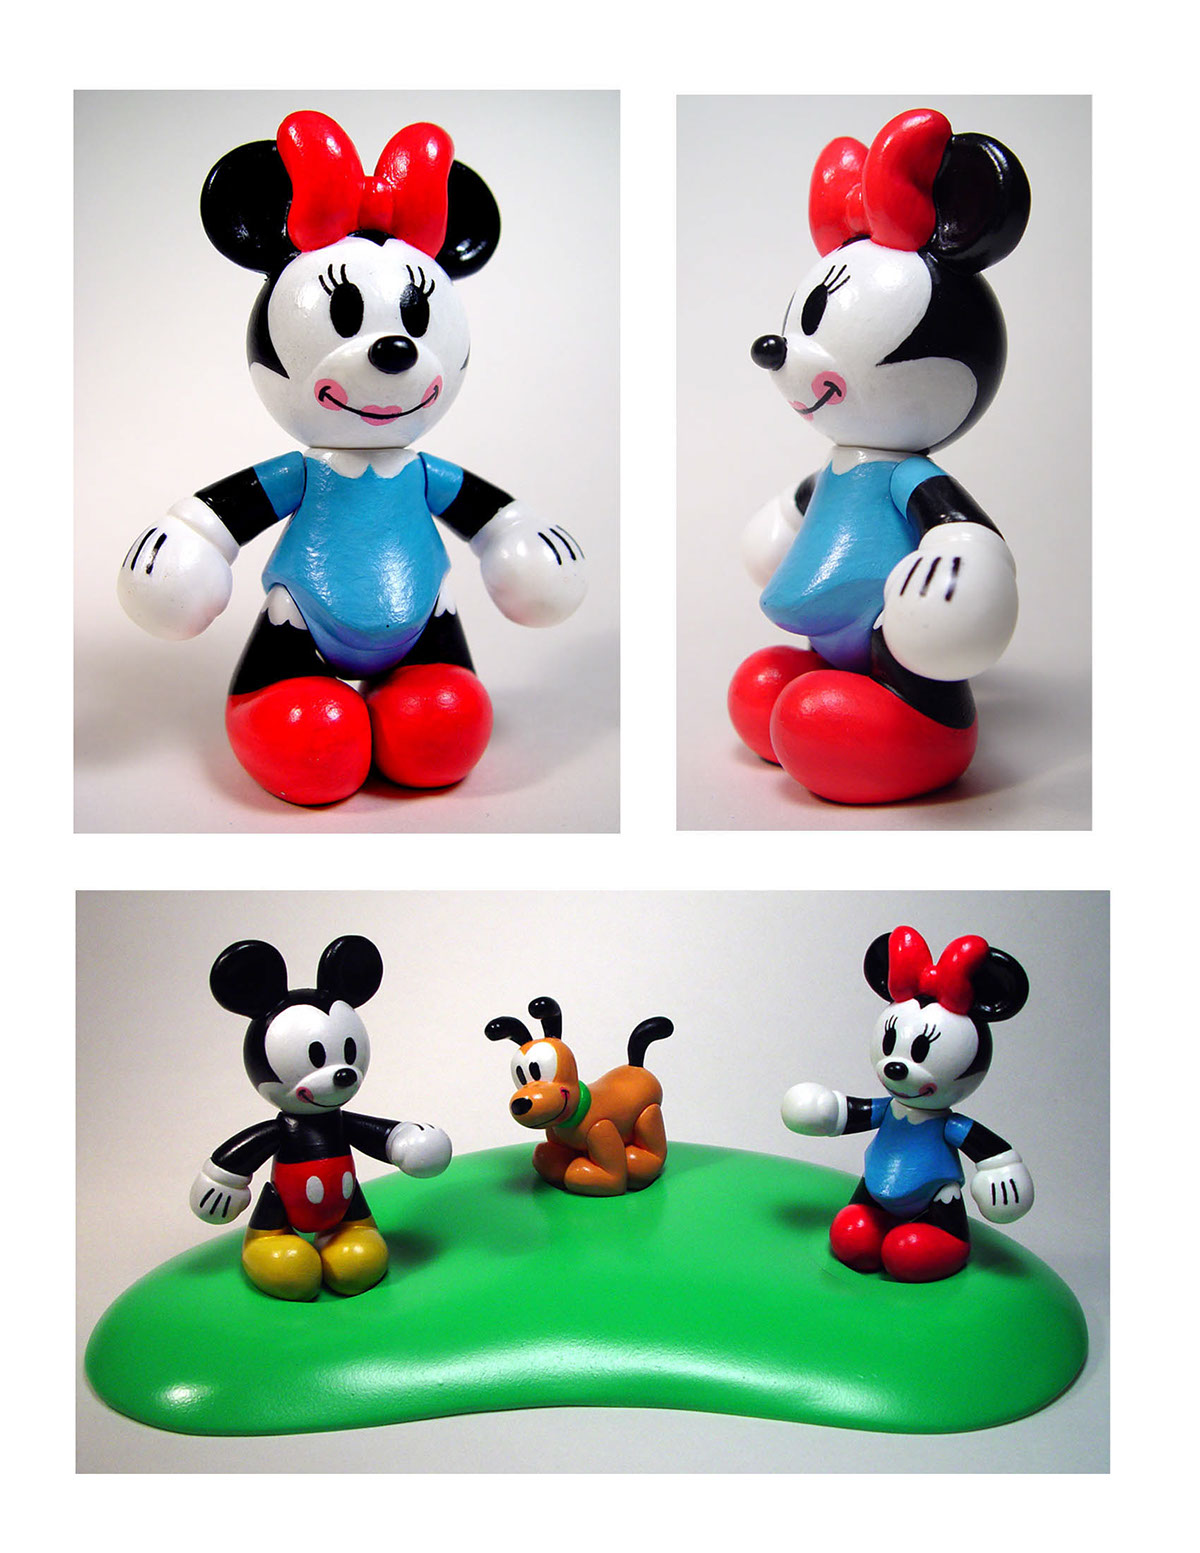 toy sculpting Disney sculptures